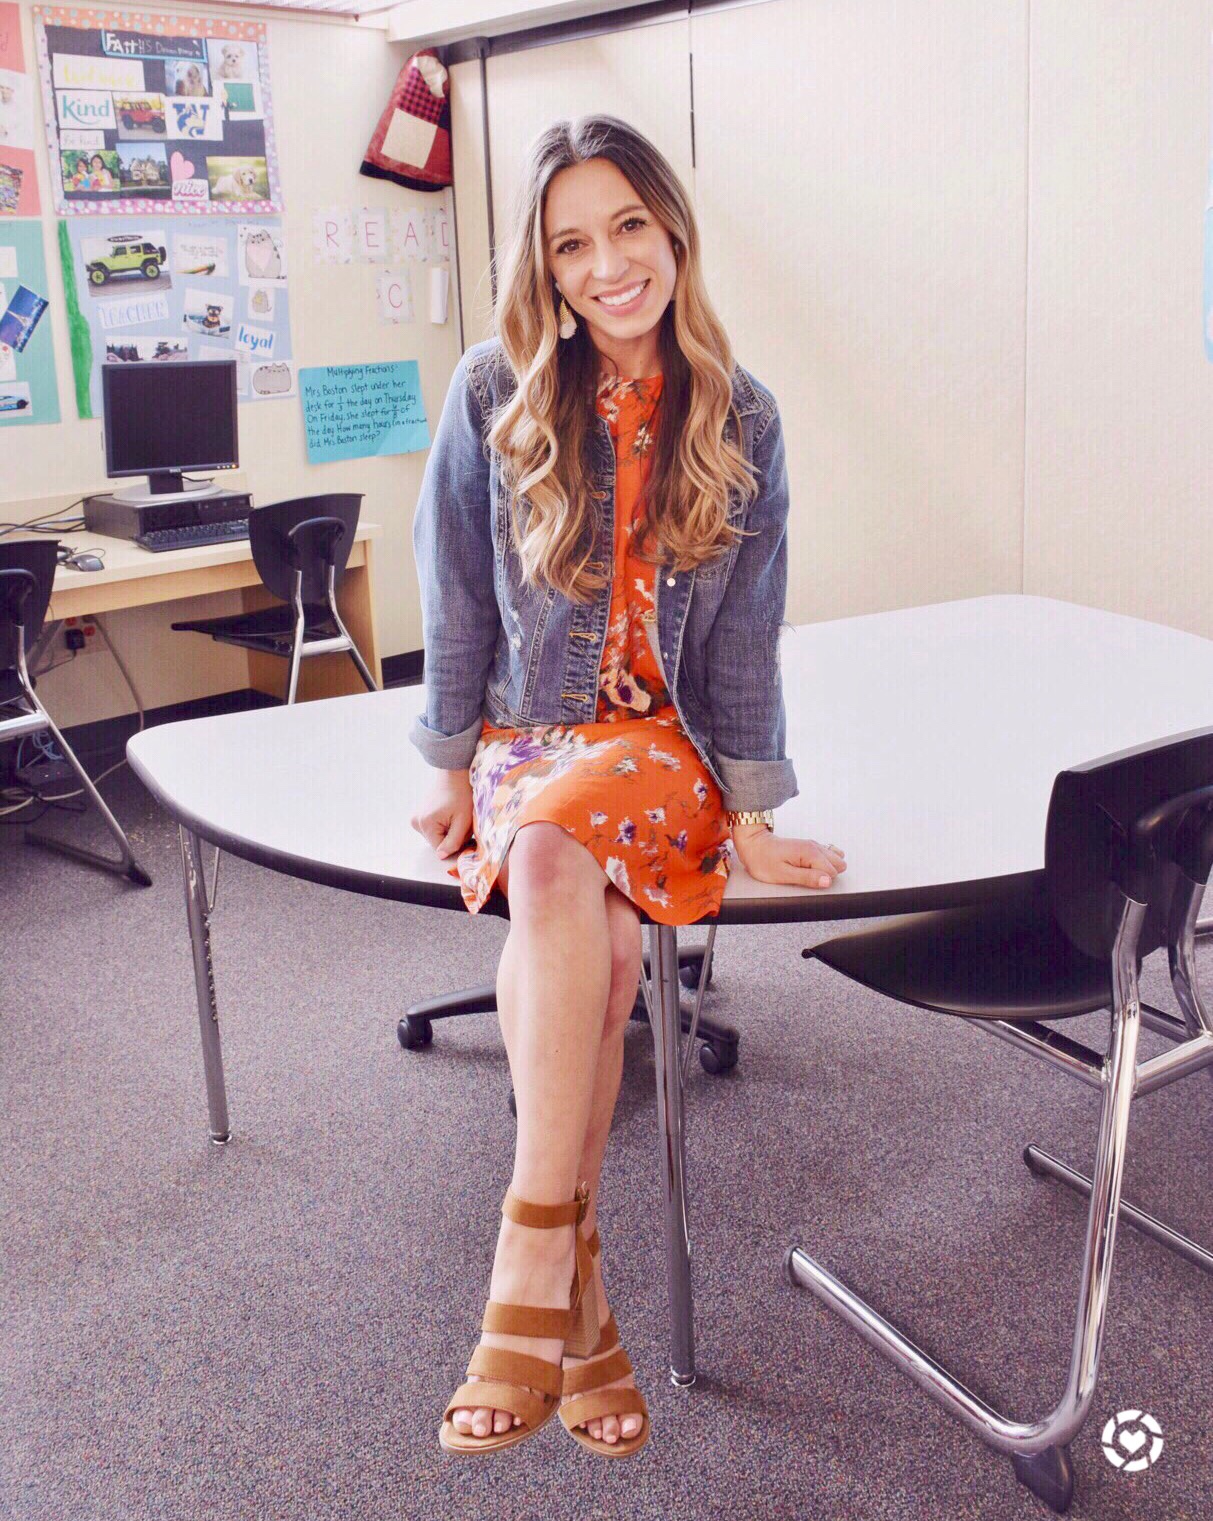 elementary school teacher outfit